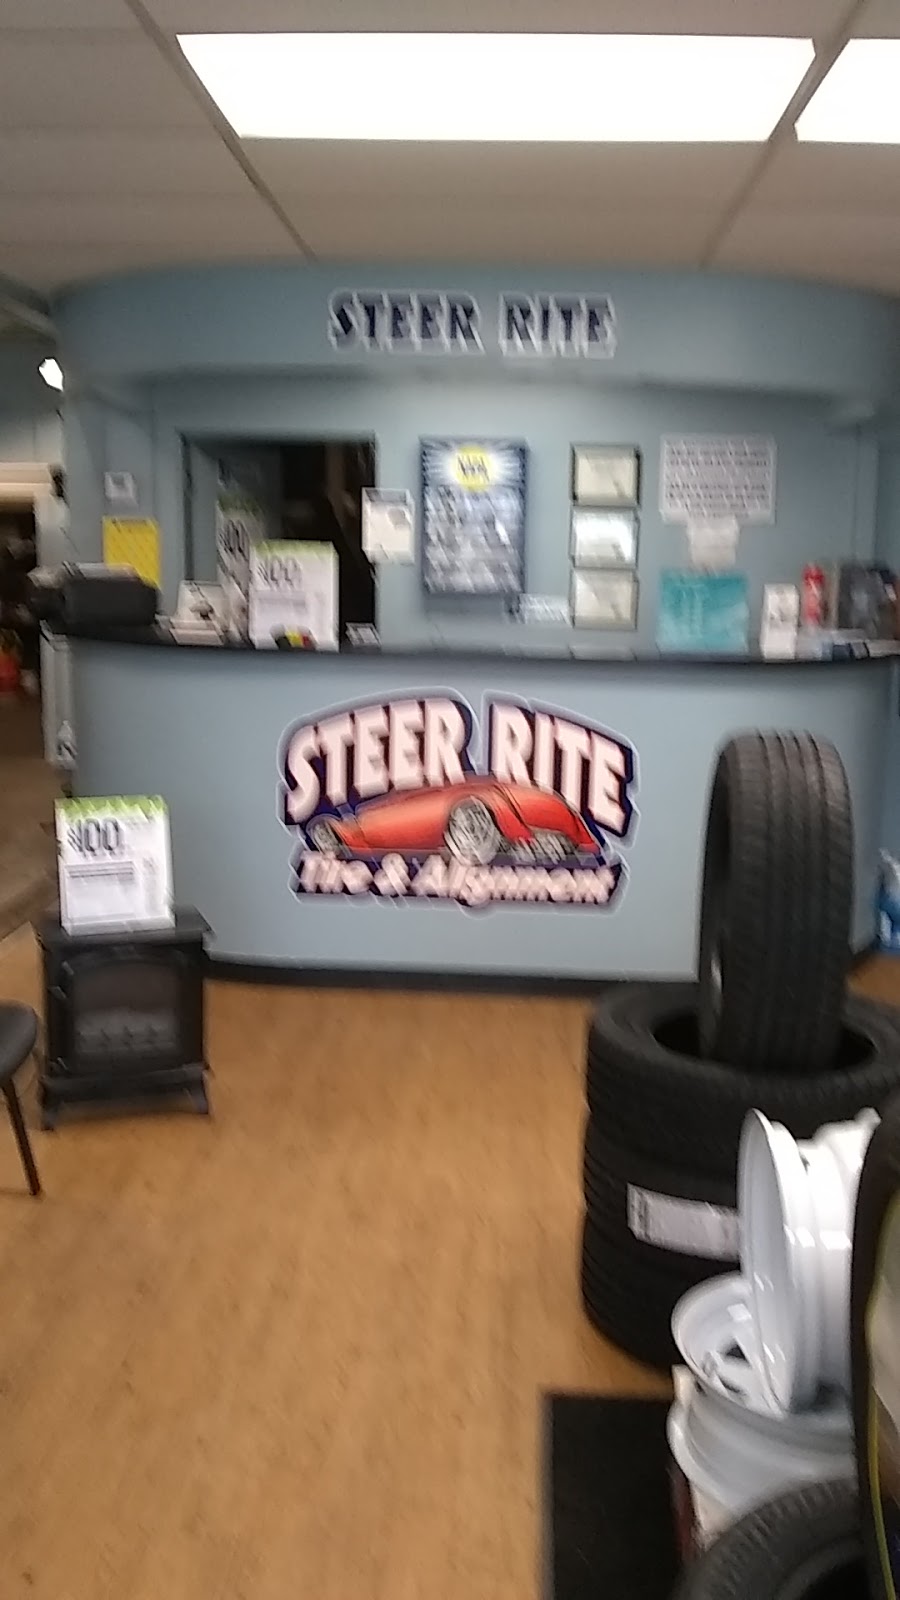 Steer-Rite, Inc. | 1350 Park St, Palmer, MA 01069 | Phone: (413) 283-5500